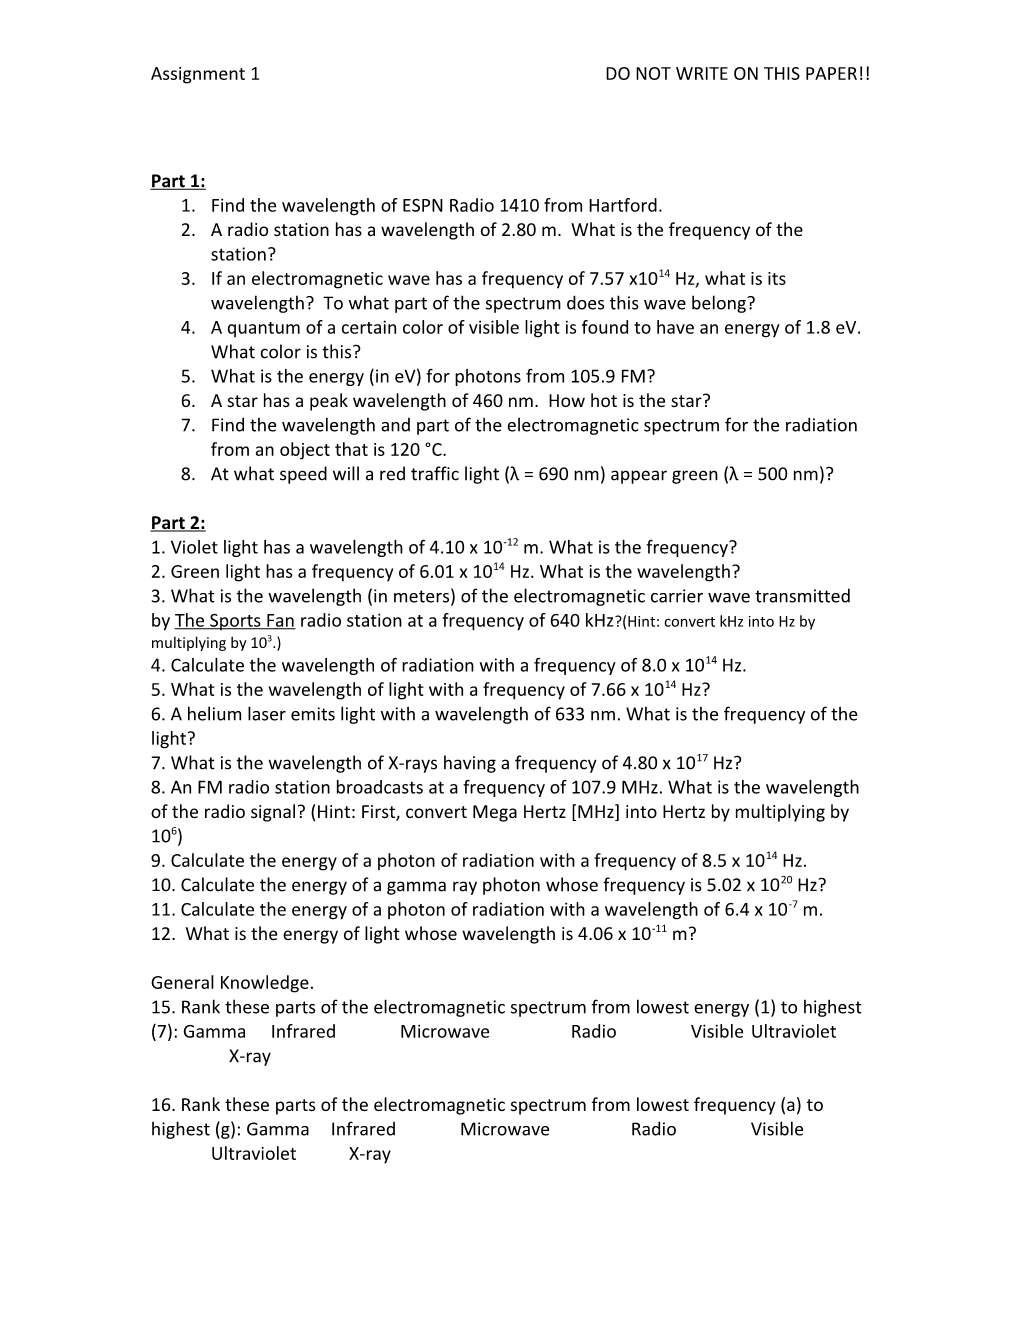 Characteristics of Light Worksheet